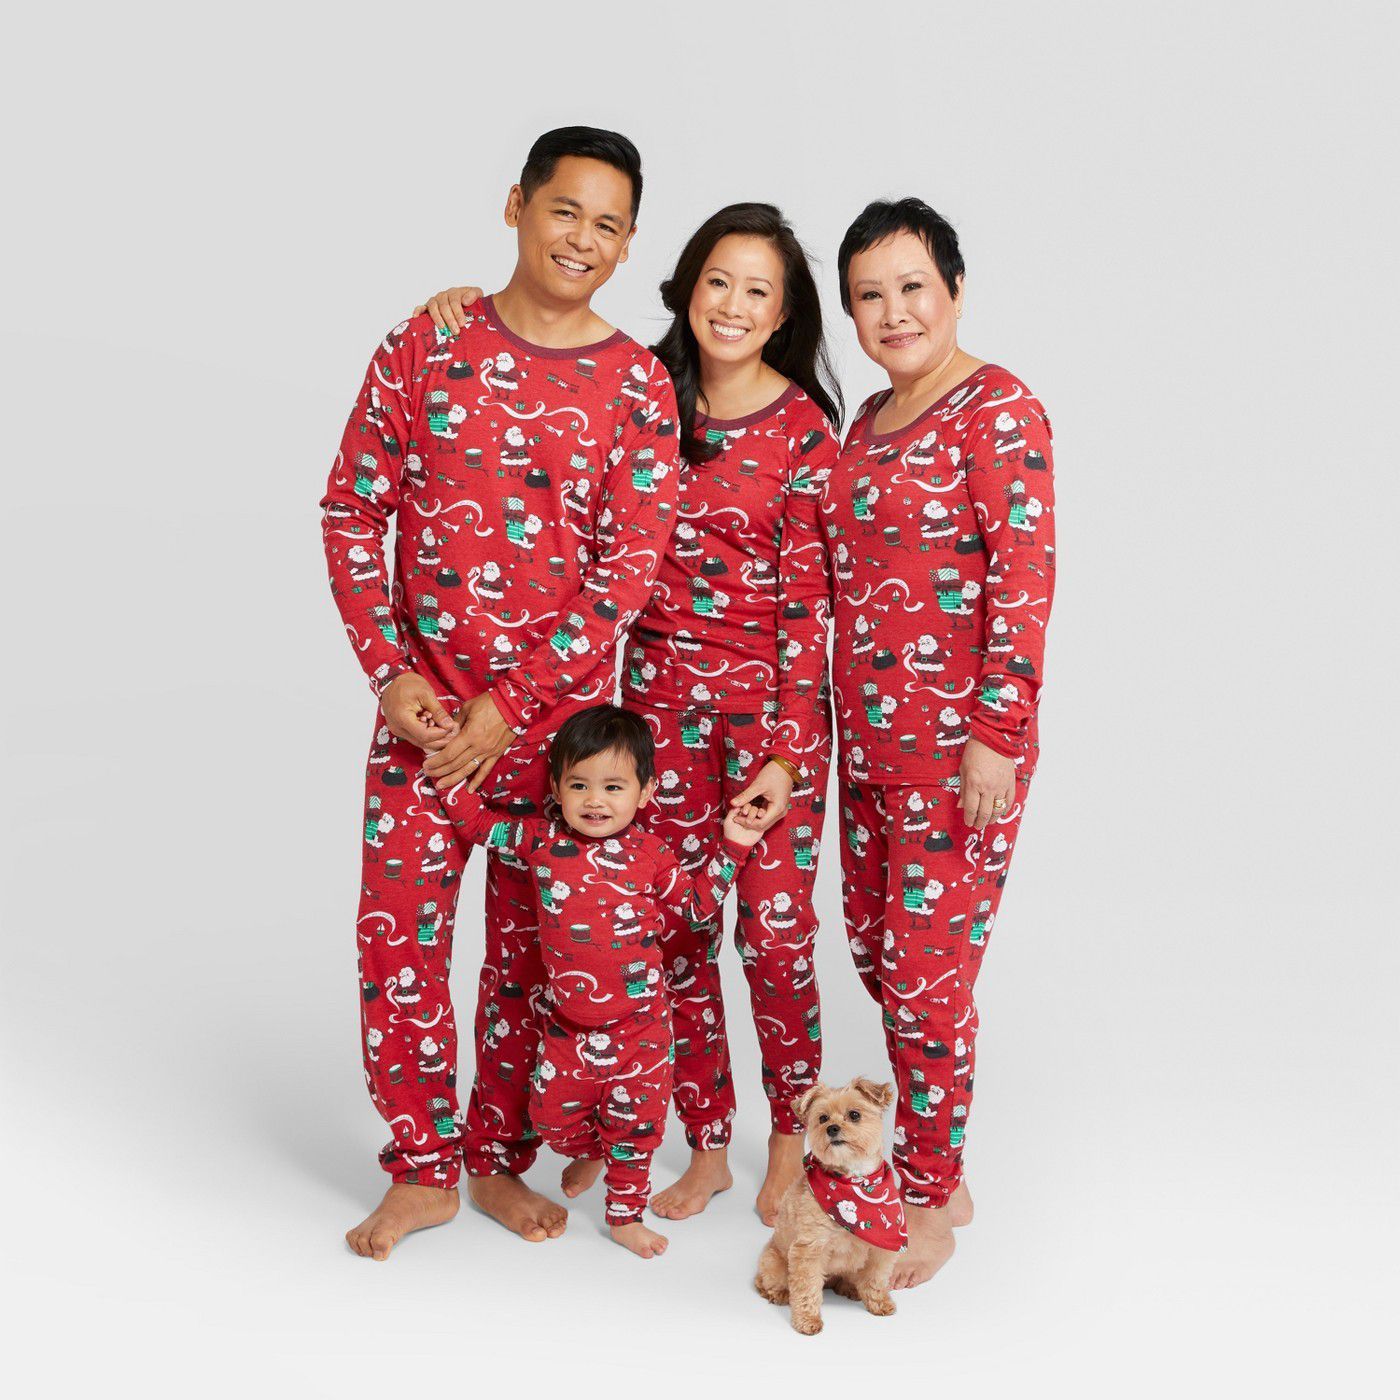 Nite Nite Holiday Santa's List Family Pajamas Collection